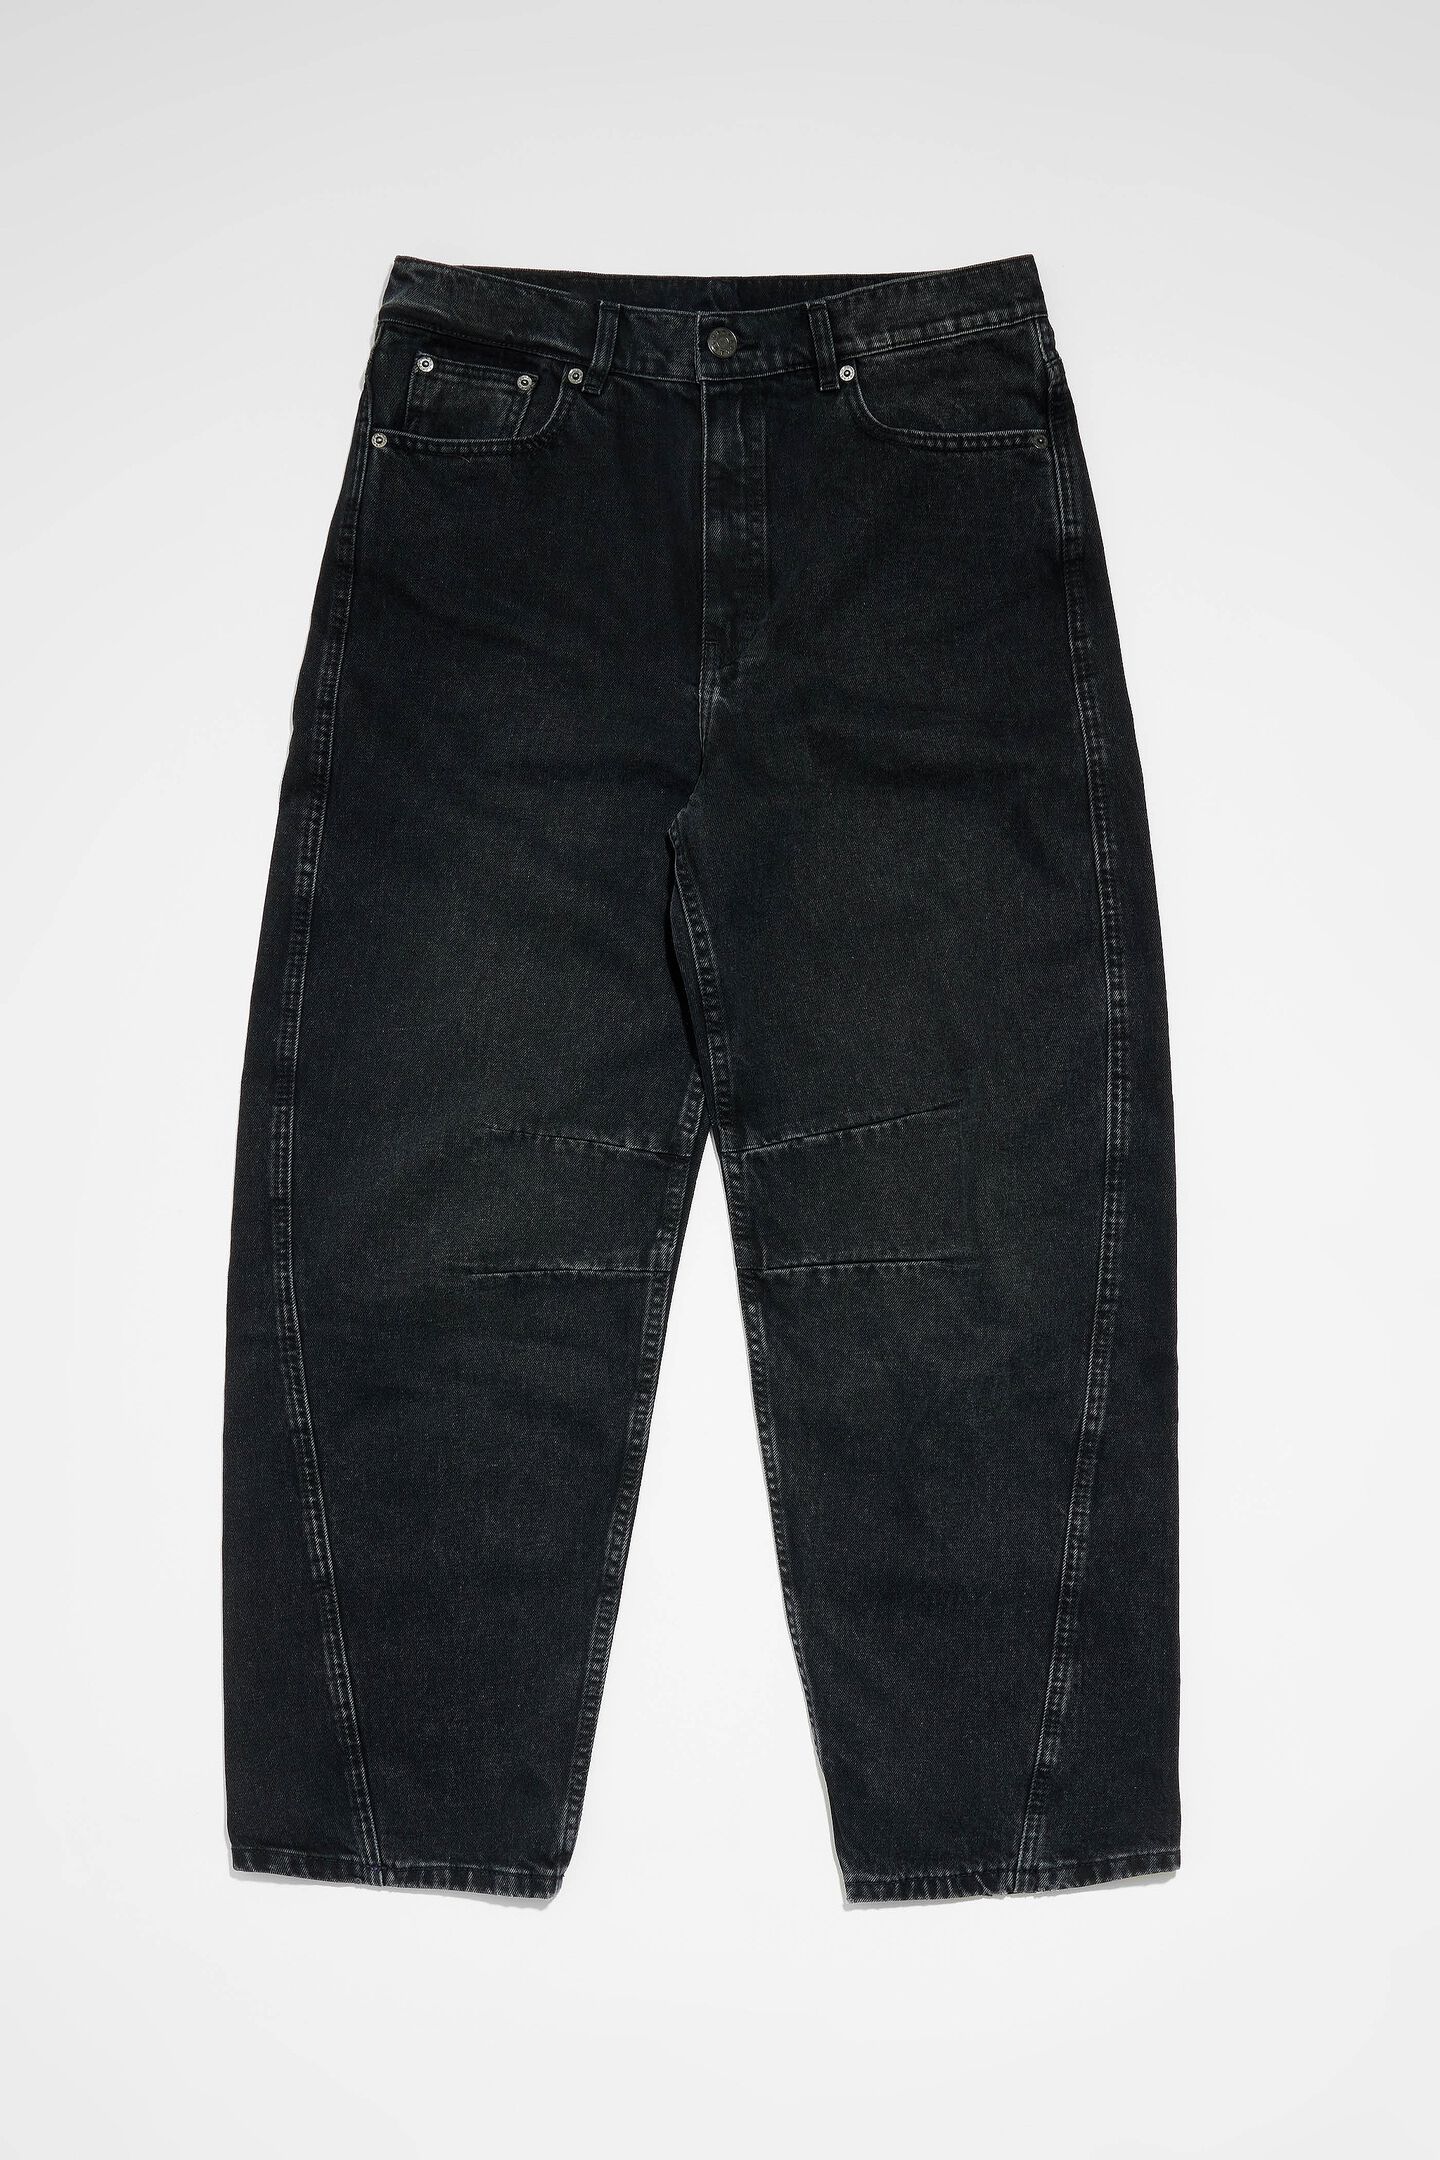 Slim jeans Bimba y Lola Black size 40 FR in Cotton - elasthane